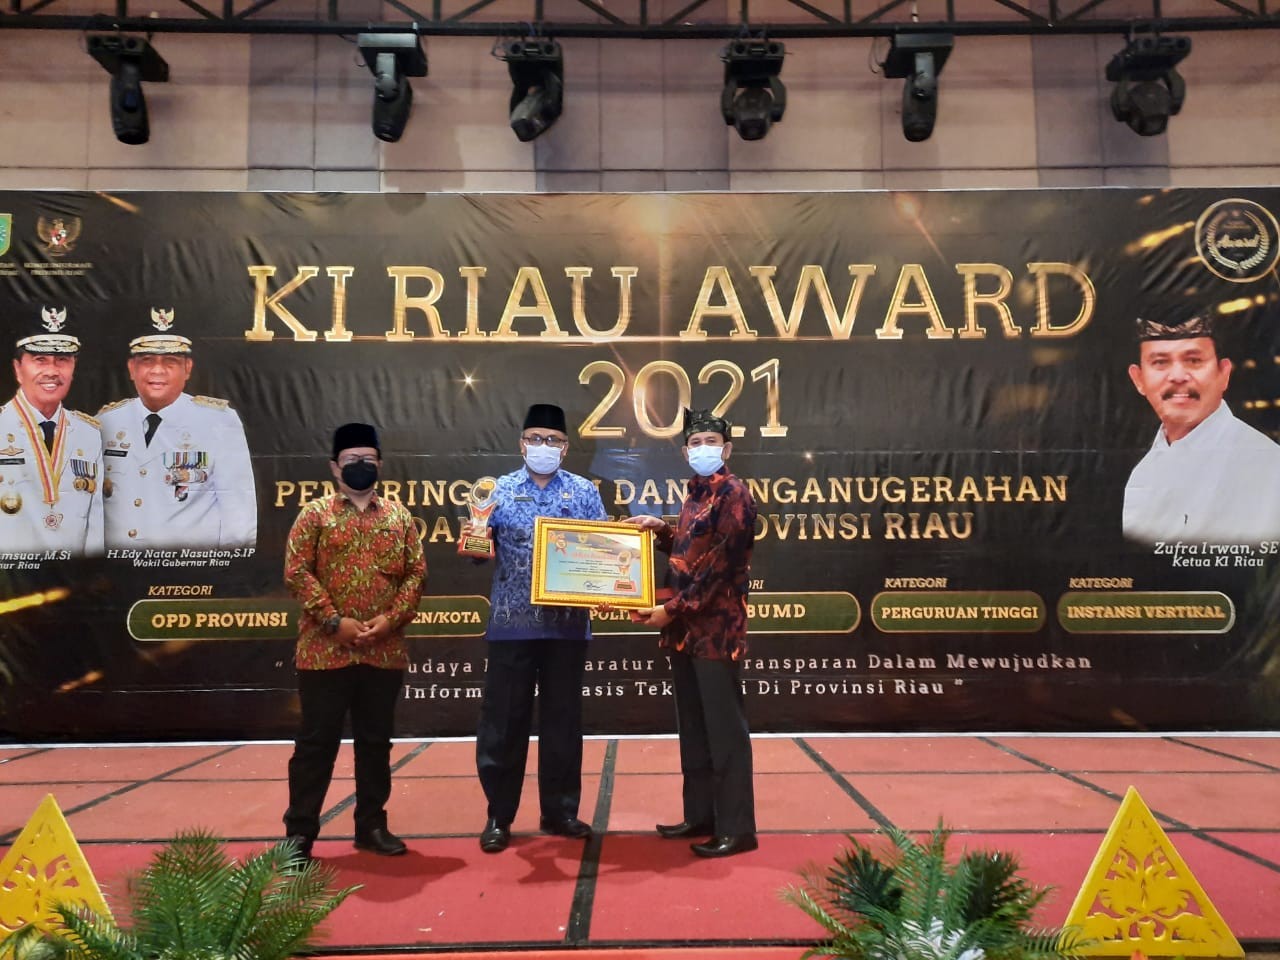 BPKAD Provinsi Riau Raih Piagam Penghargaan KI Riau Award 2021 sebagai Peringkat Menuju Informatif (Kategori PPID Pembantu Provinsi Riau) 